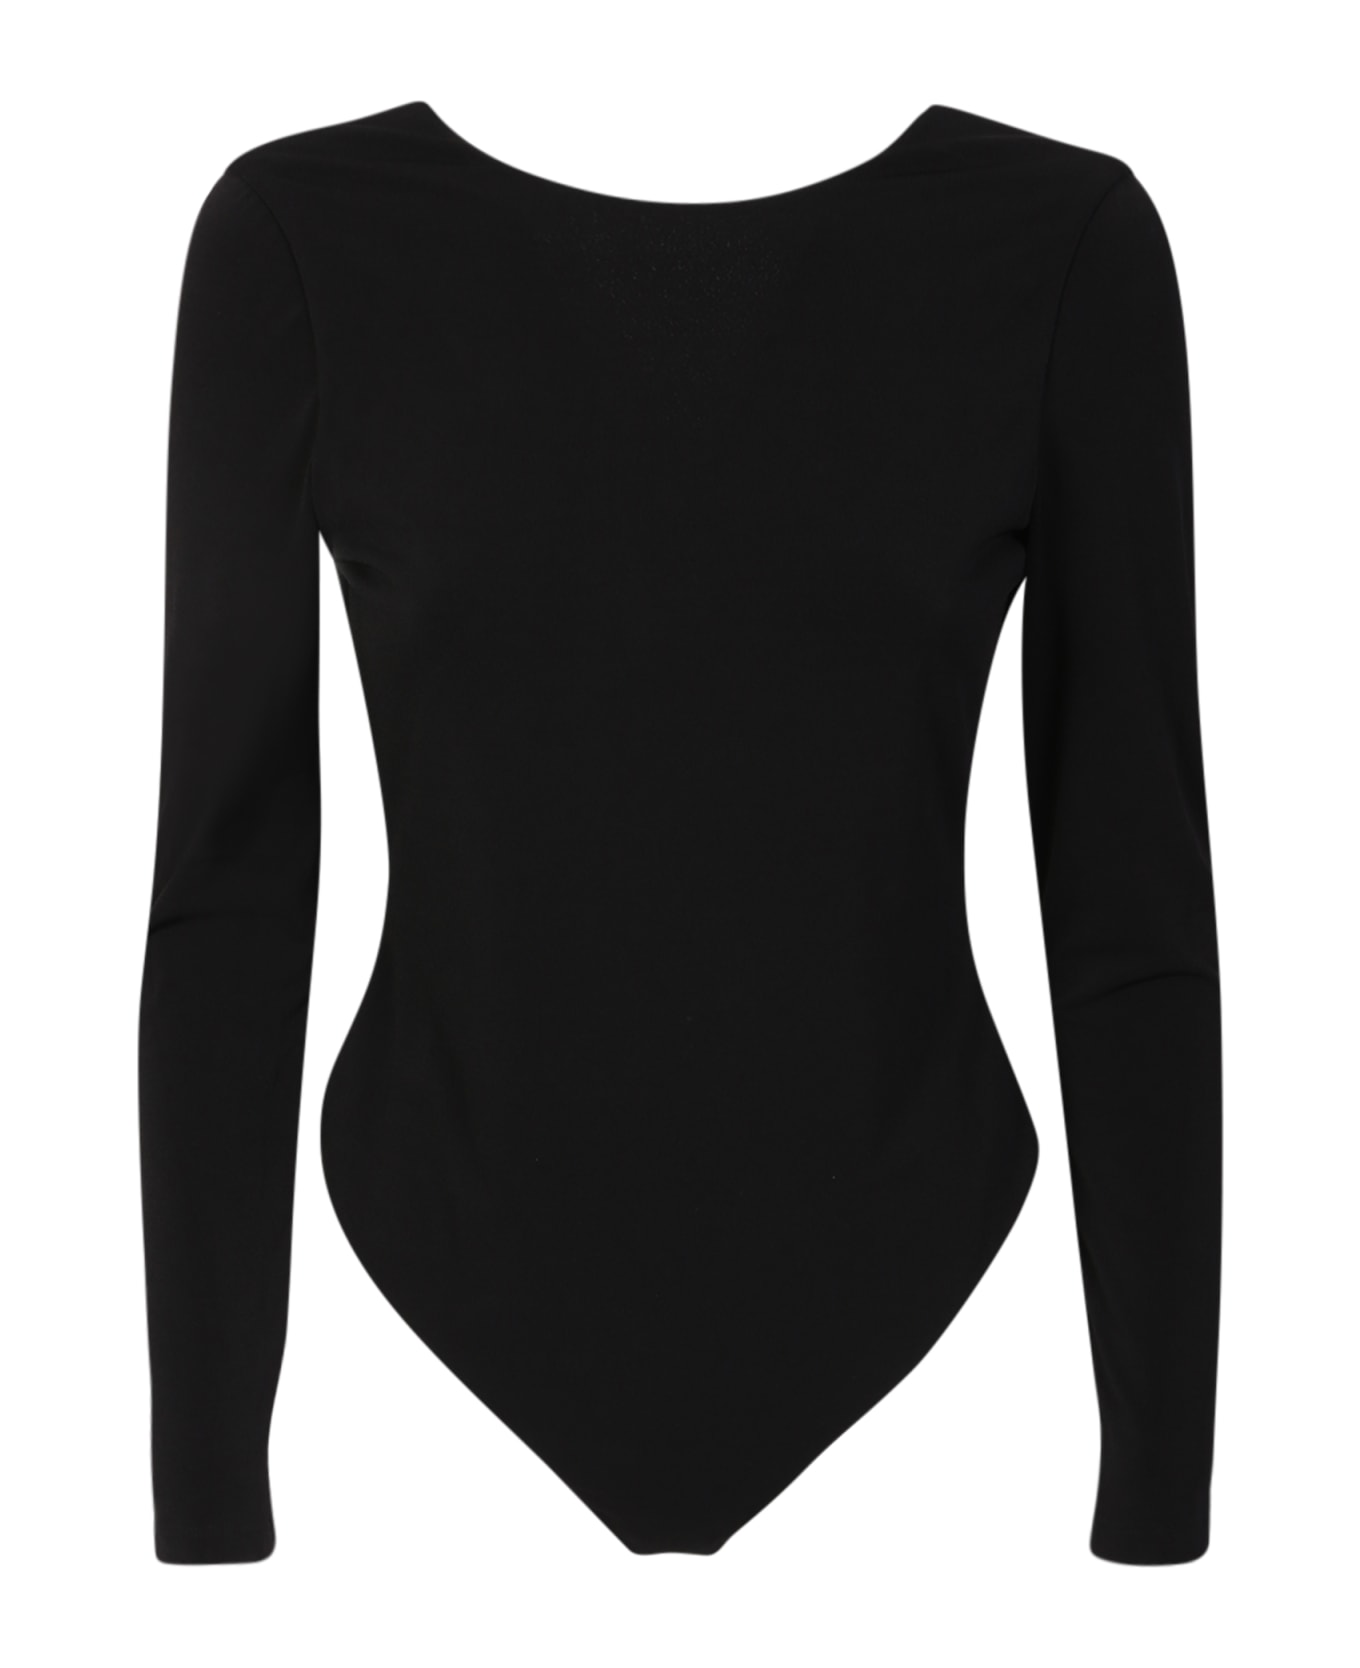 Alice + Olivia Marcella Chain Detail Black Bodysuit - Black